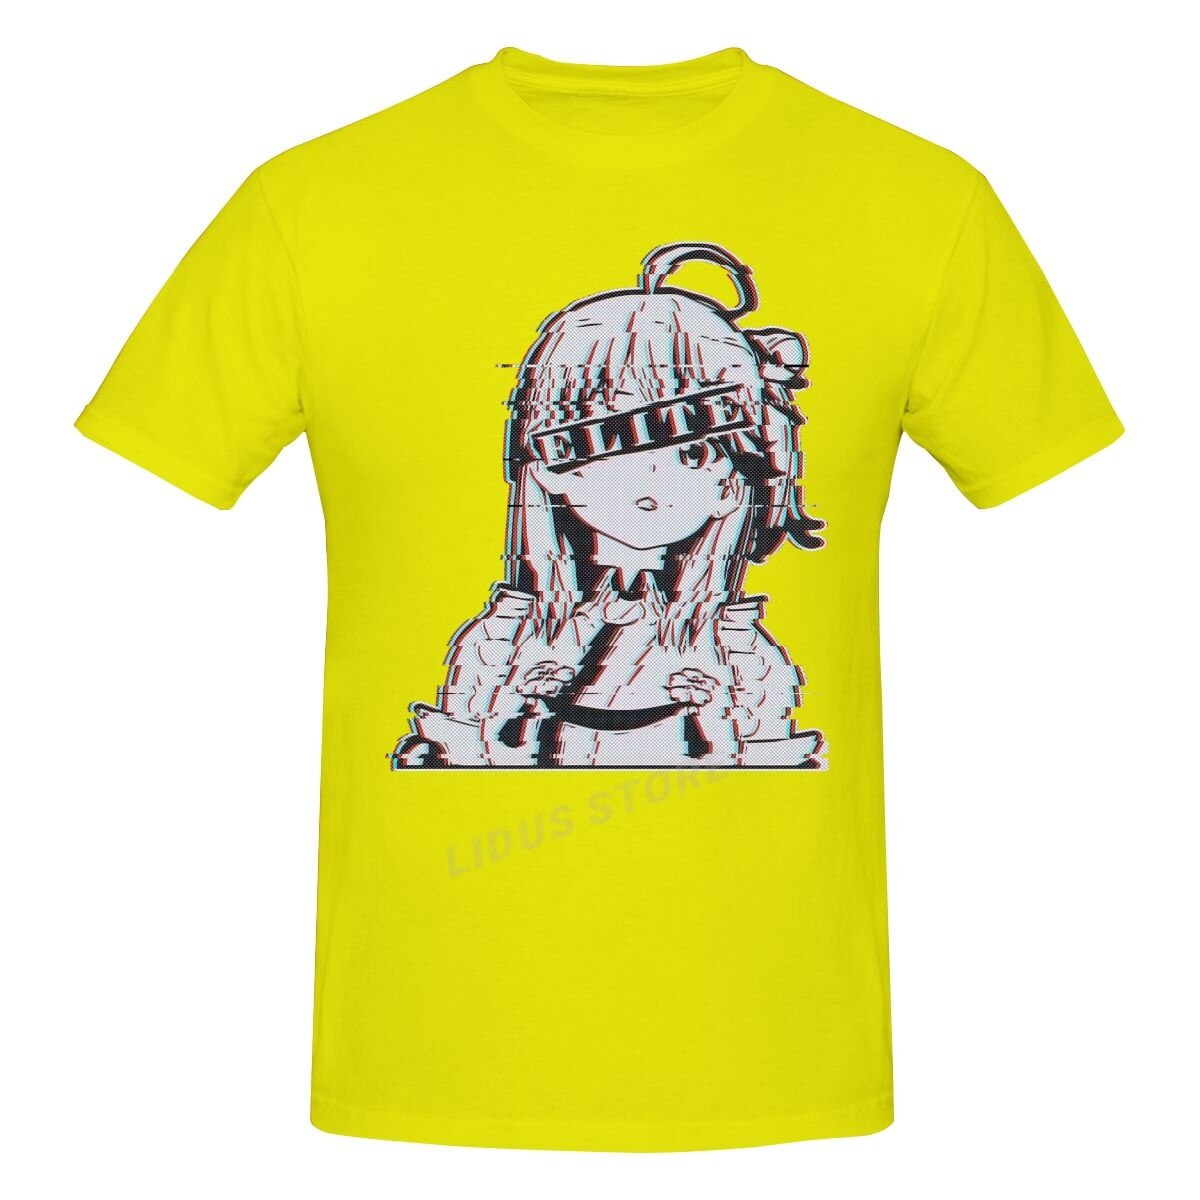 Fashion Leisure Hololive VTuber Elite Miko T-shirt Harajuku Streetwear 100% Cotton Graphics Tshirt Brands Tee Tops